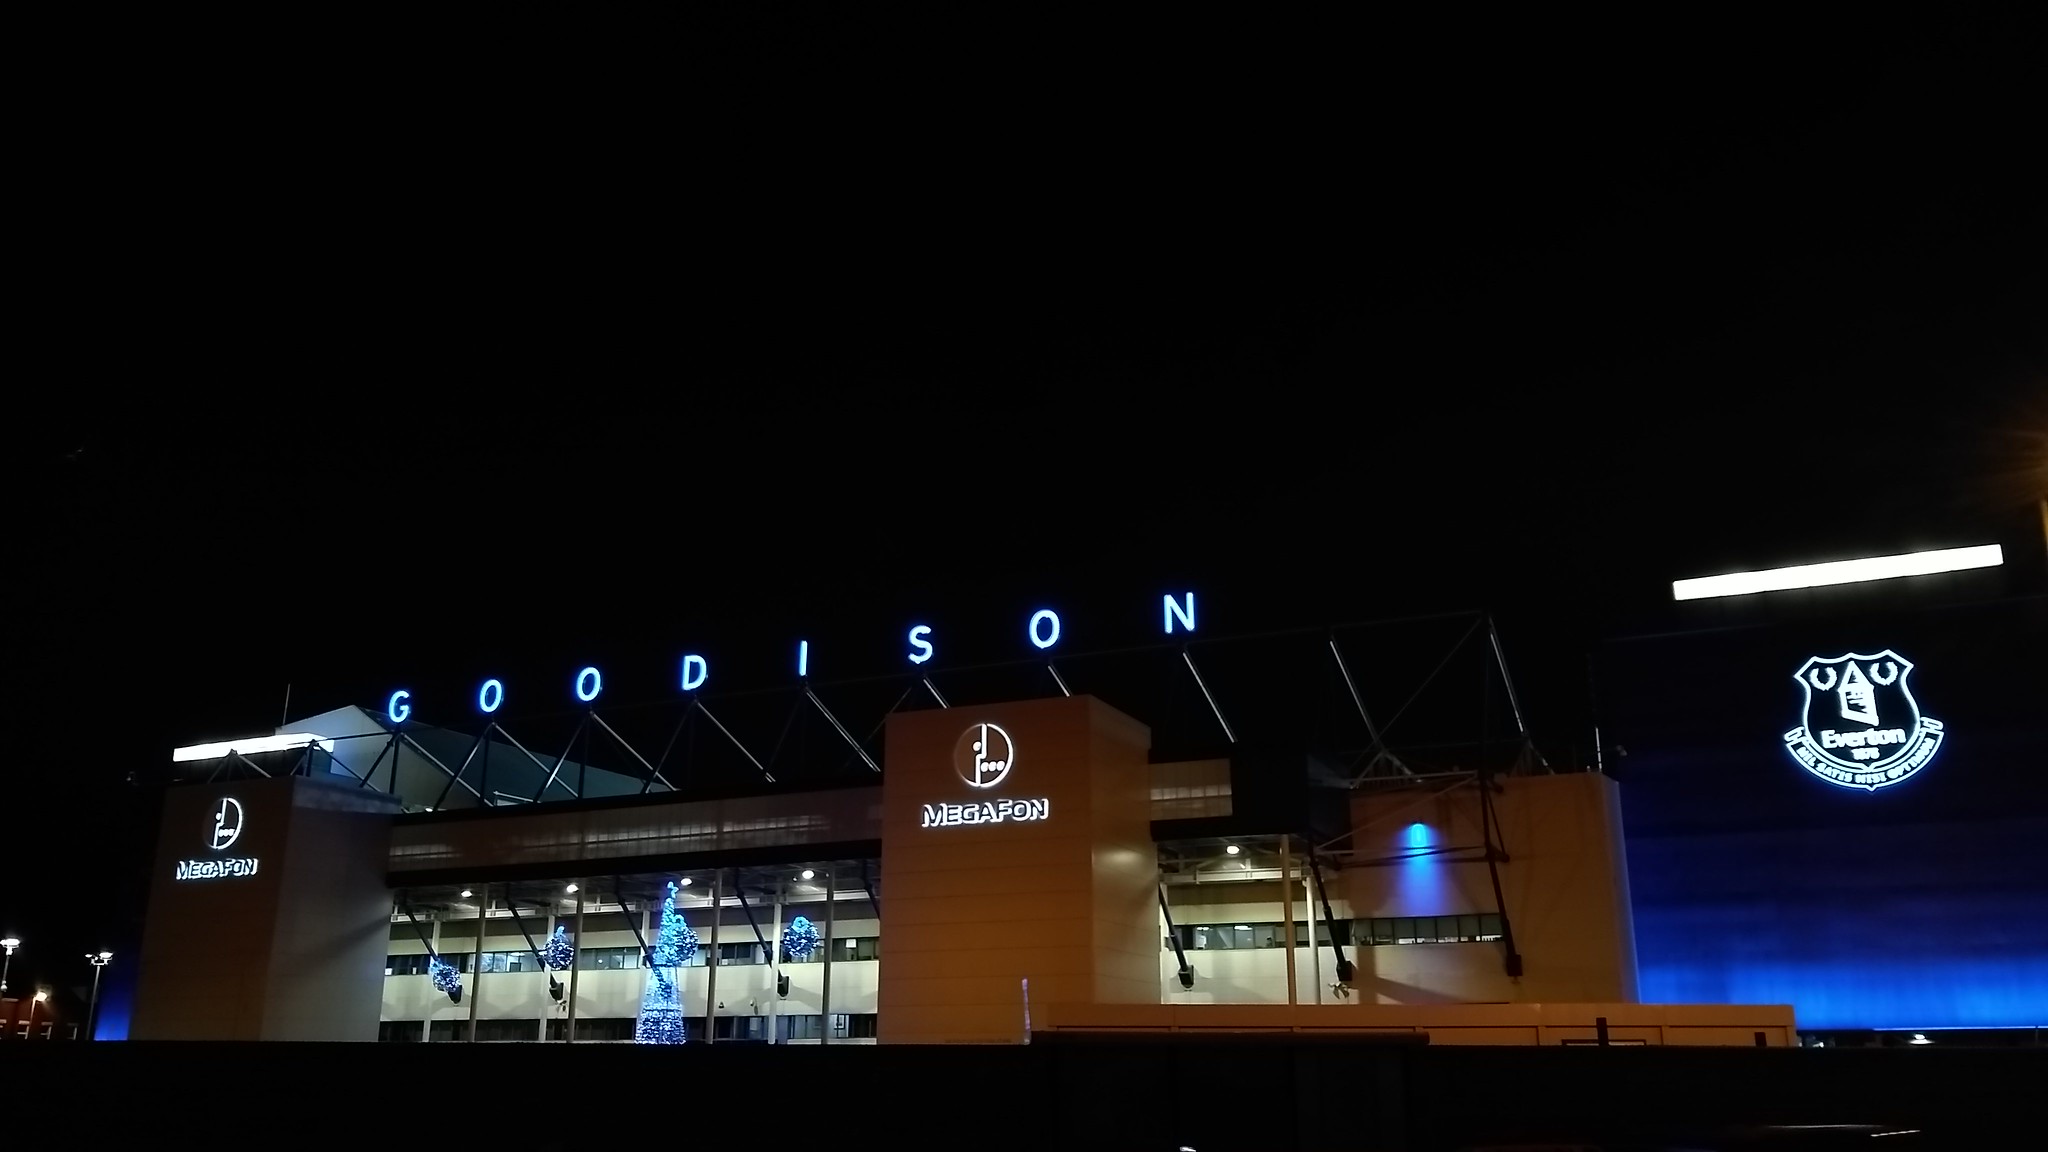 Goodison Park - Everton